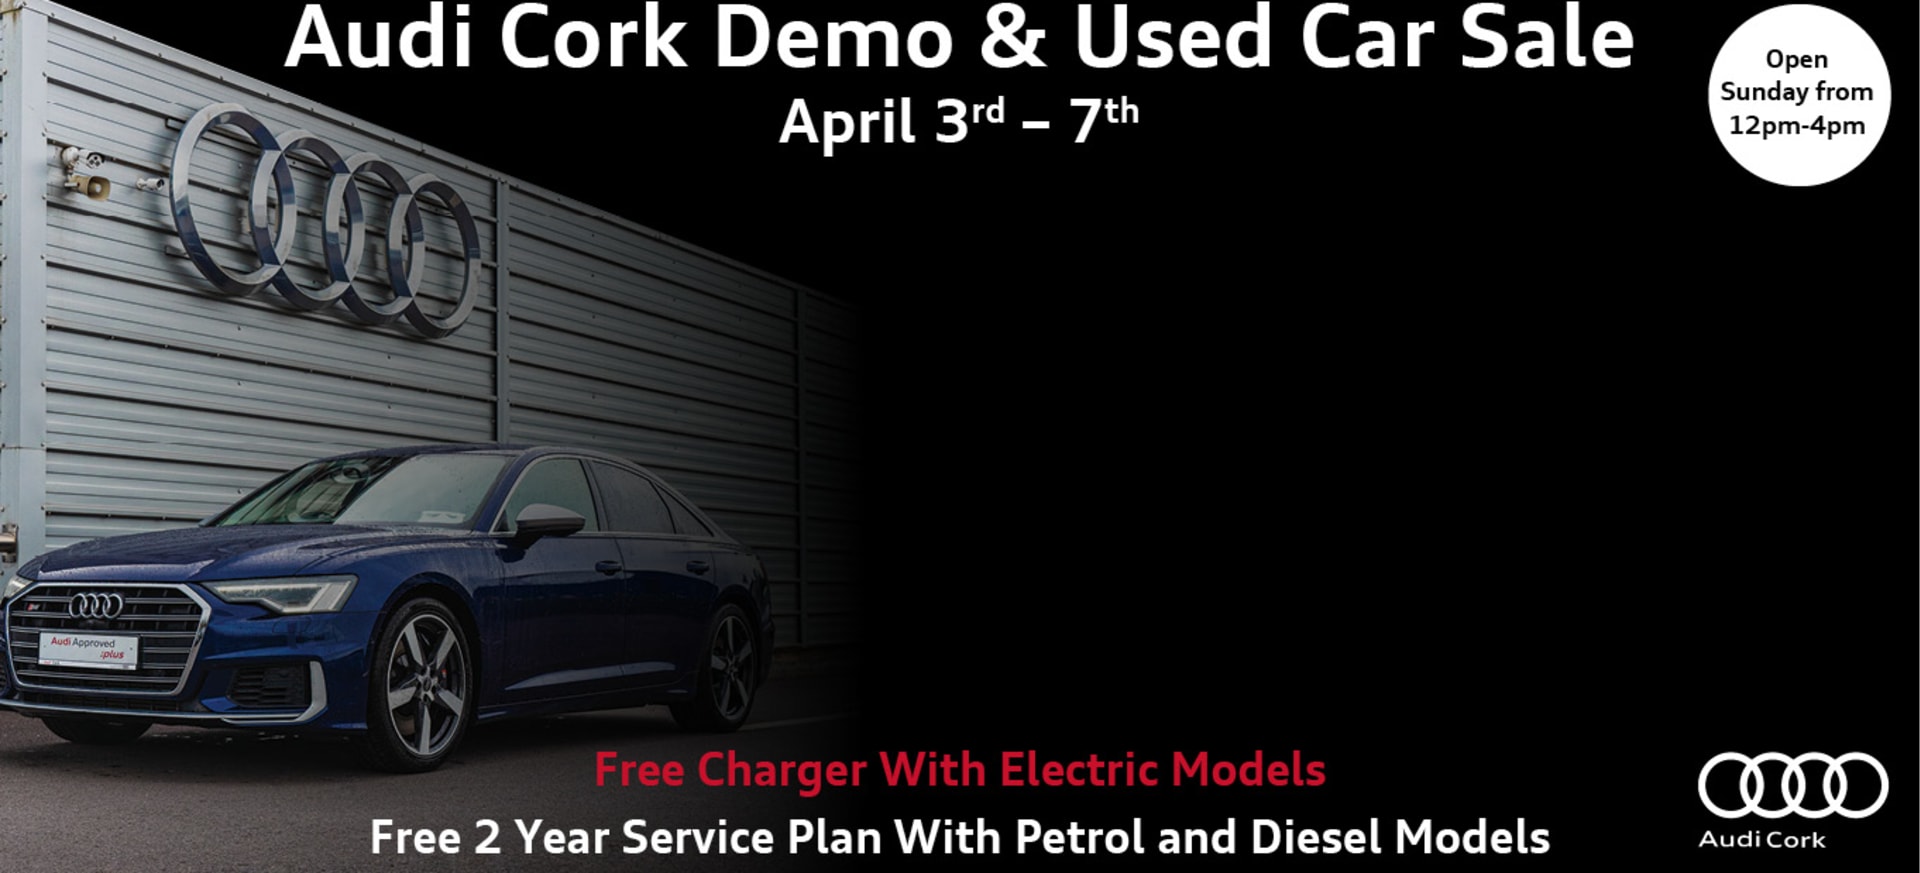 The Audi Cork Annual Used Car Sale 24 